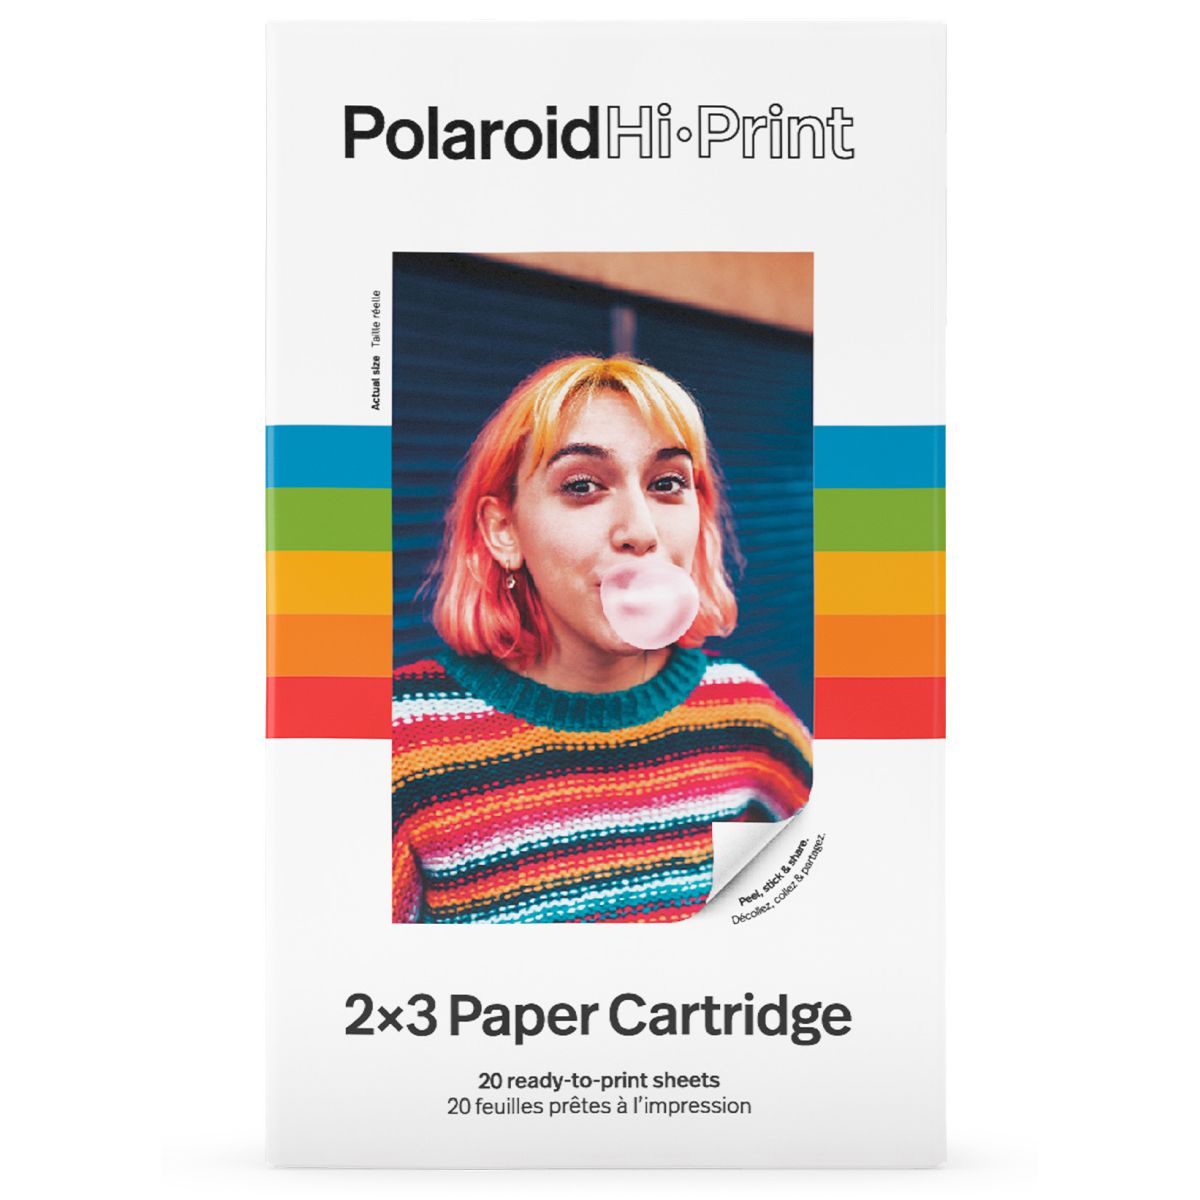 Polaroid Hi Print 2x3 Paper Cartridge 20Sheets